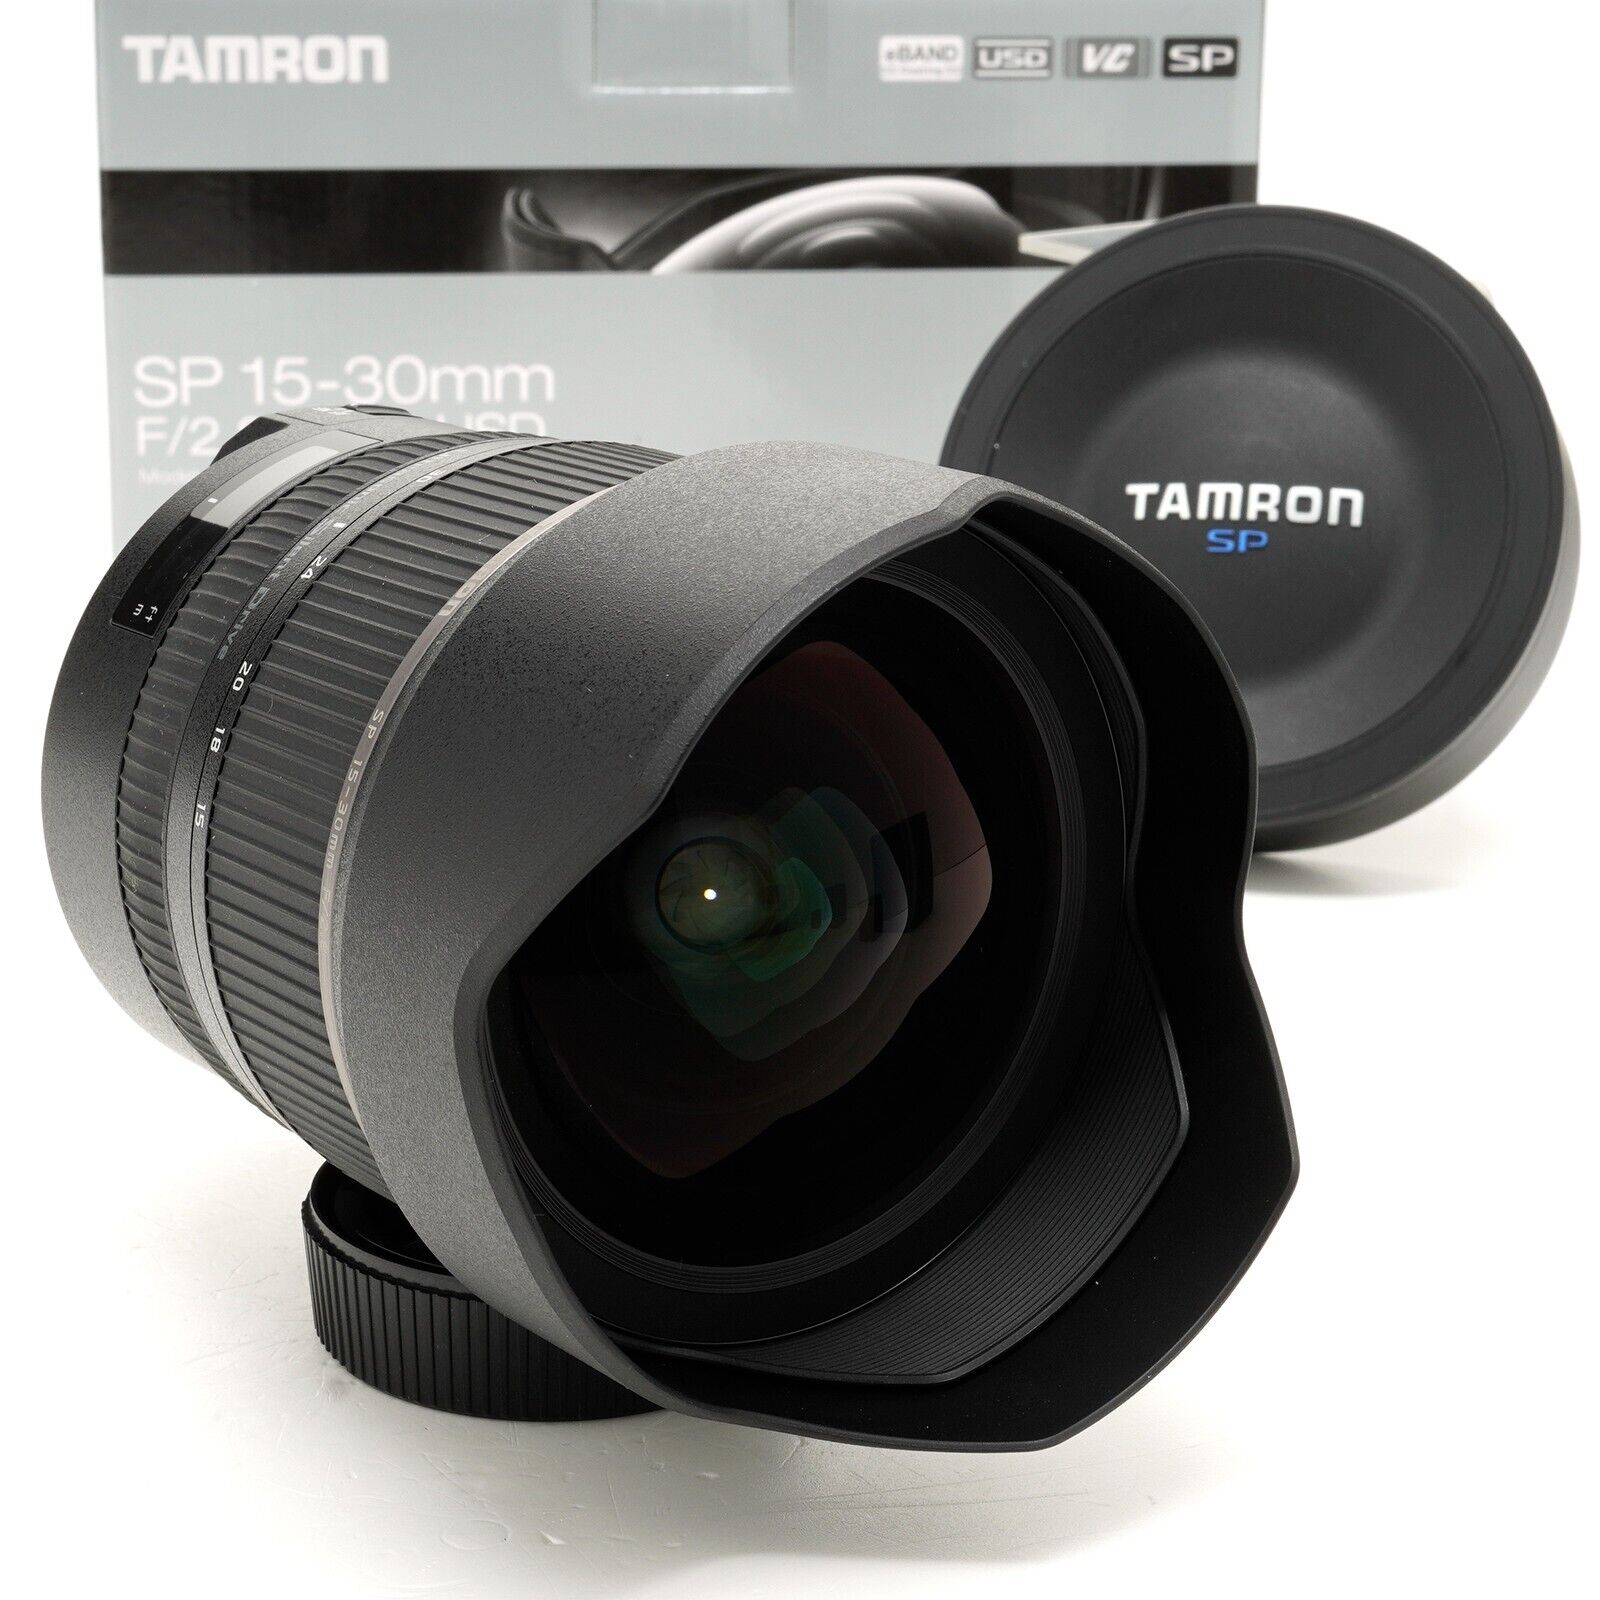 Tamron SP 15-30mm F/2.8 Di VC USD Lens A012 for Nikon F